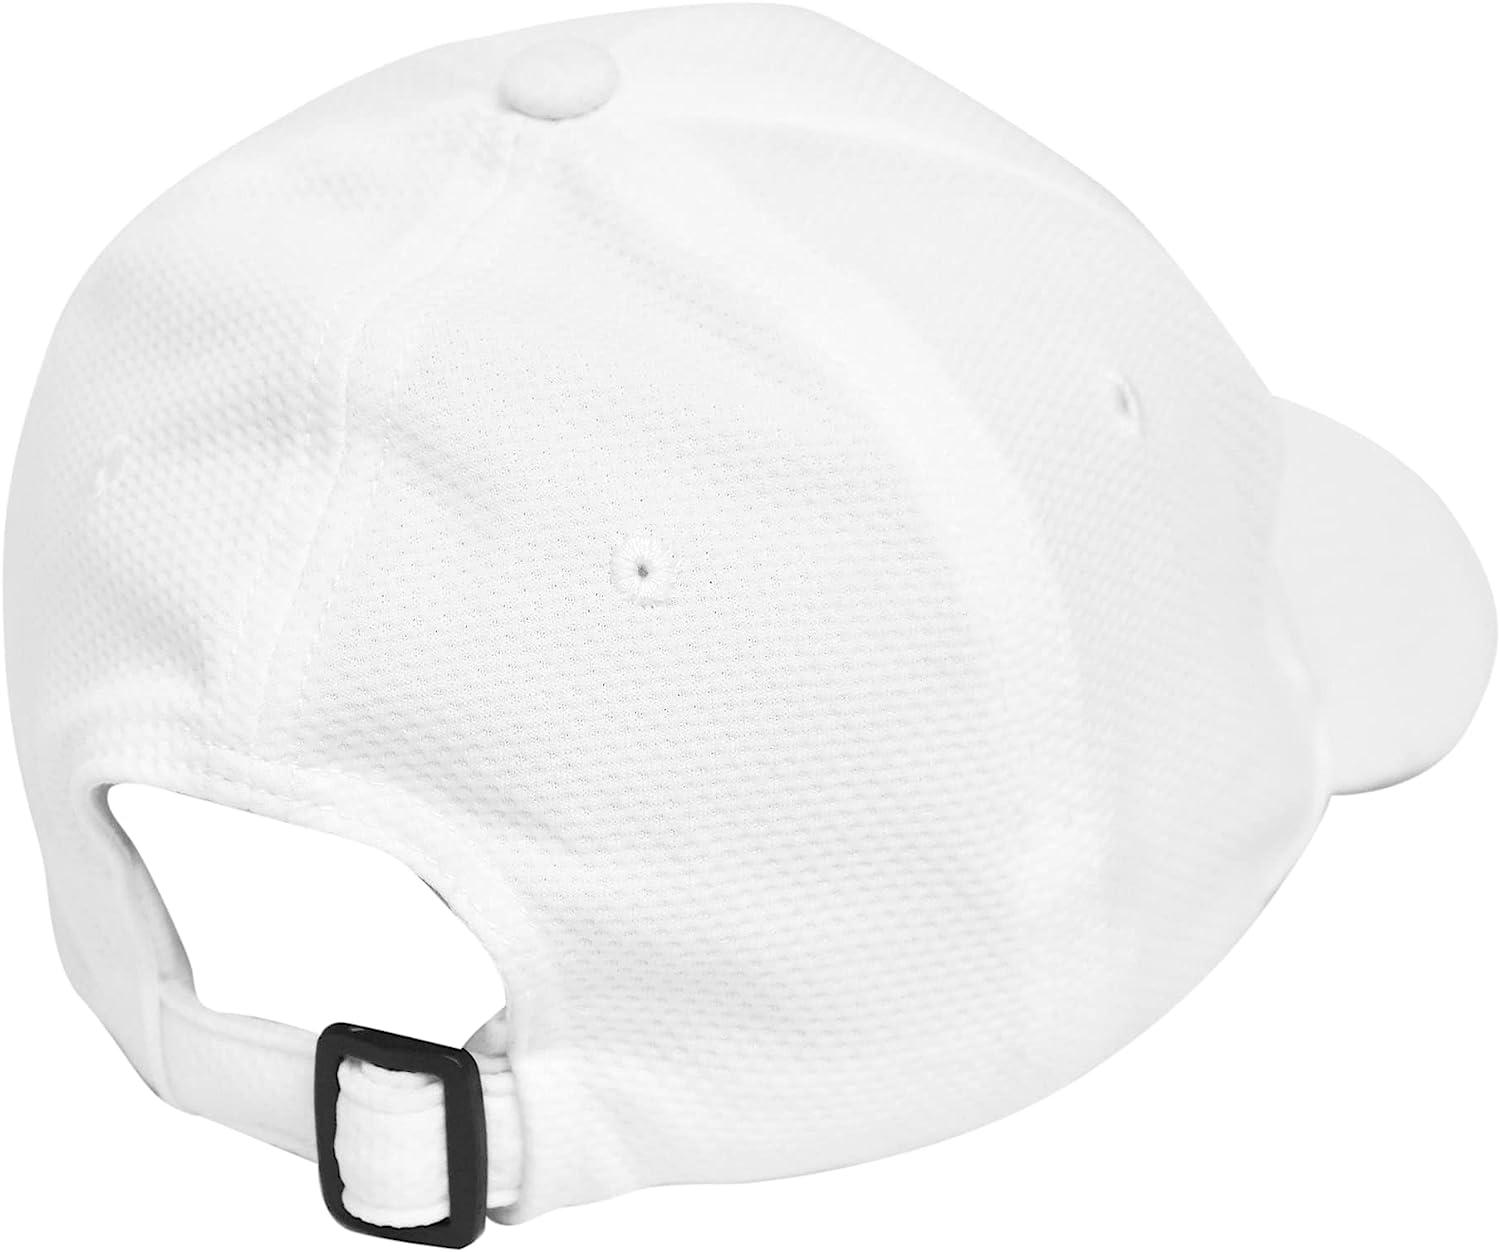 BUILTCOOL Adult Cooling Baseball Hat – Men & Women Mesh Ball Cap, One Size  